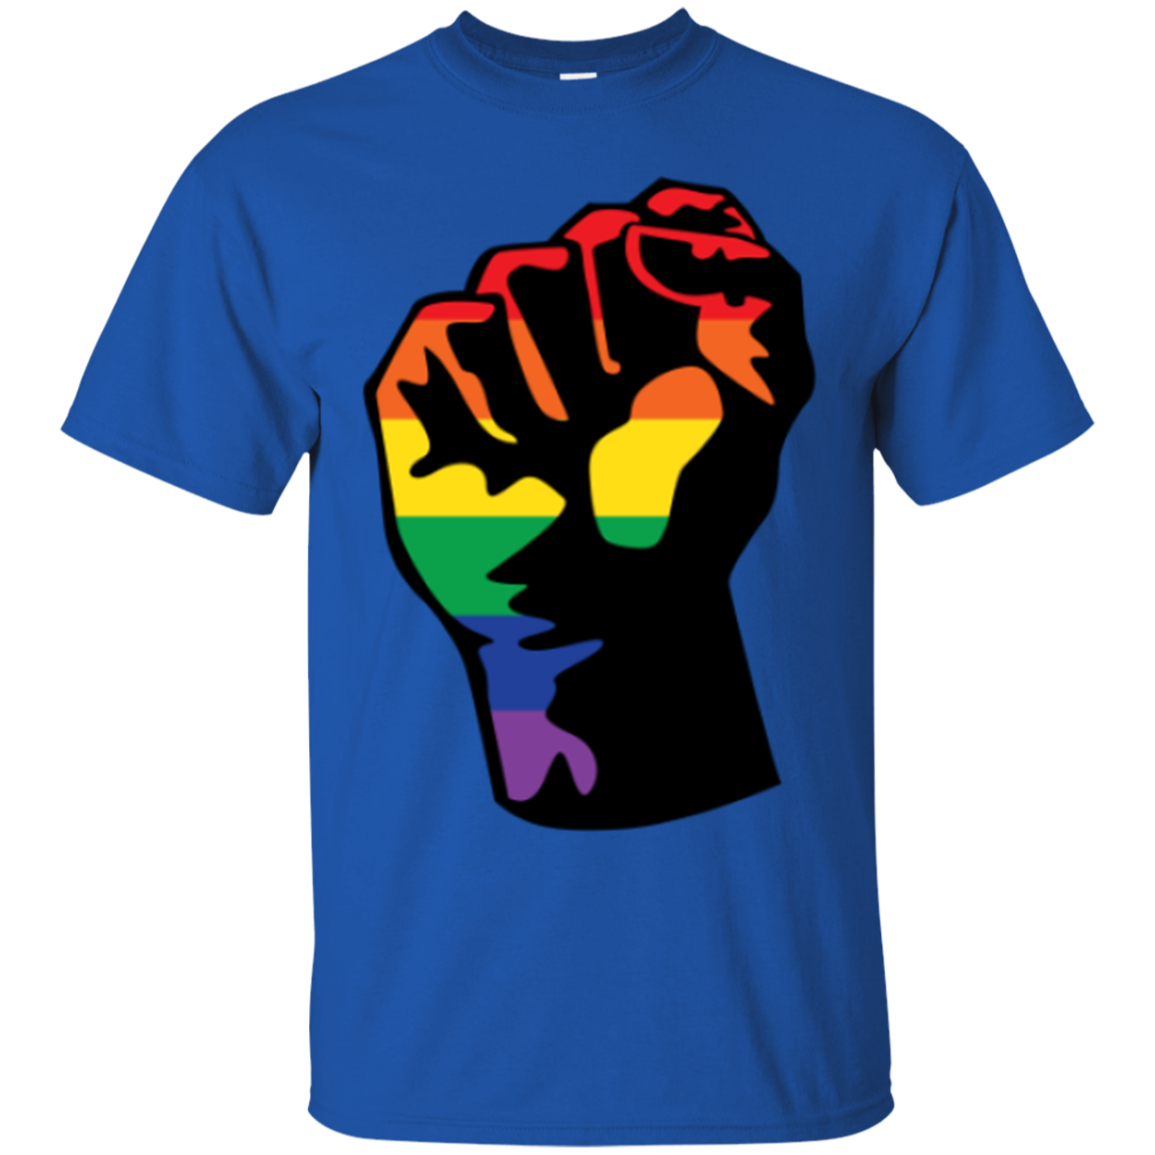 LGBT Pride Unity blue T shirt for men